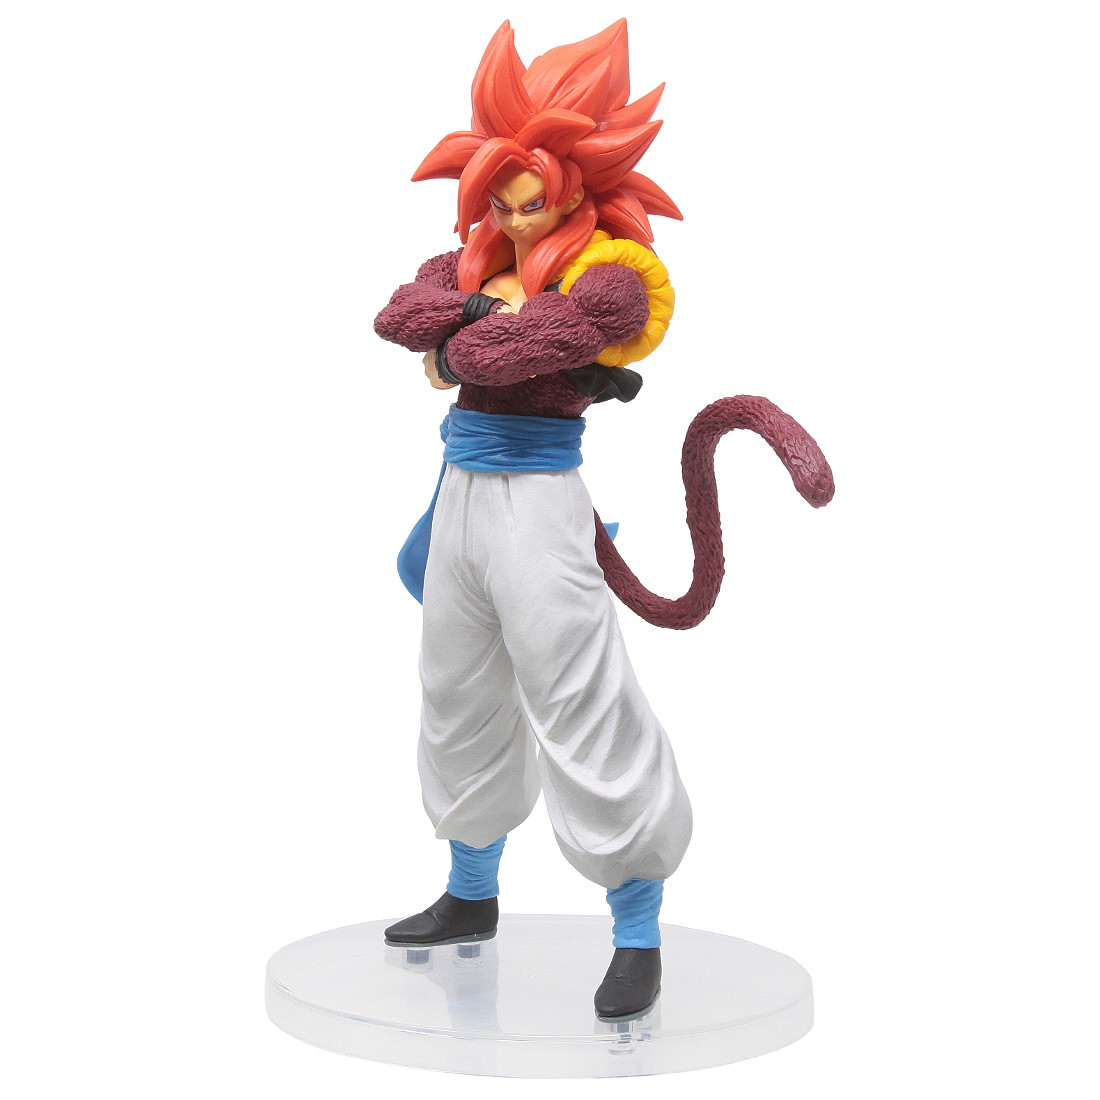 Bandai Ichiban Dragon Ball Super Saiyan 4 Son Goku Figure 